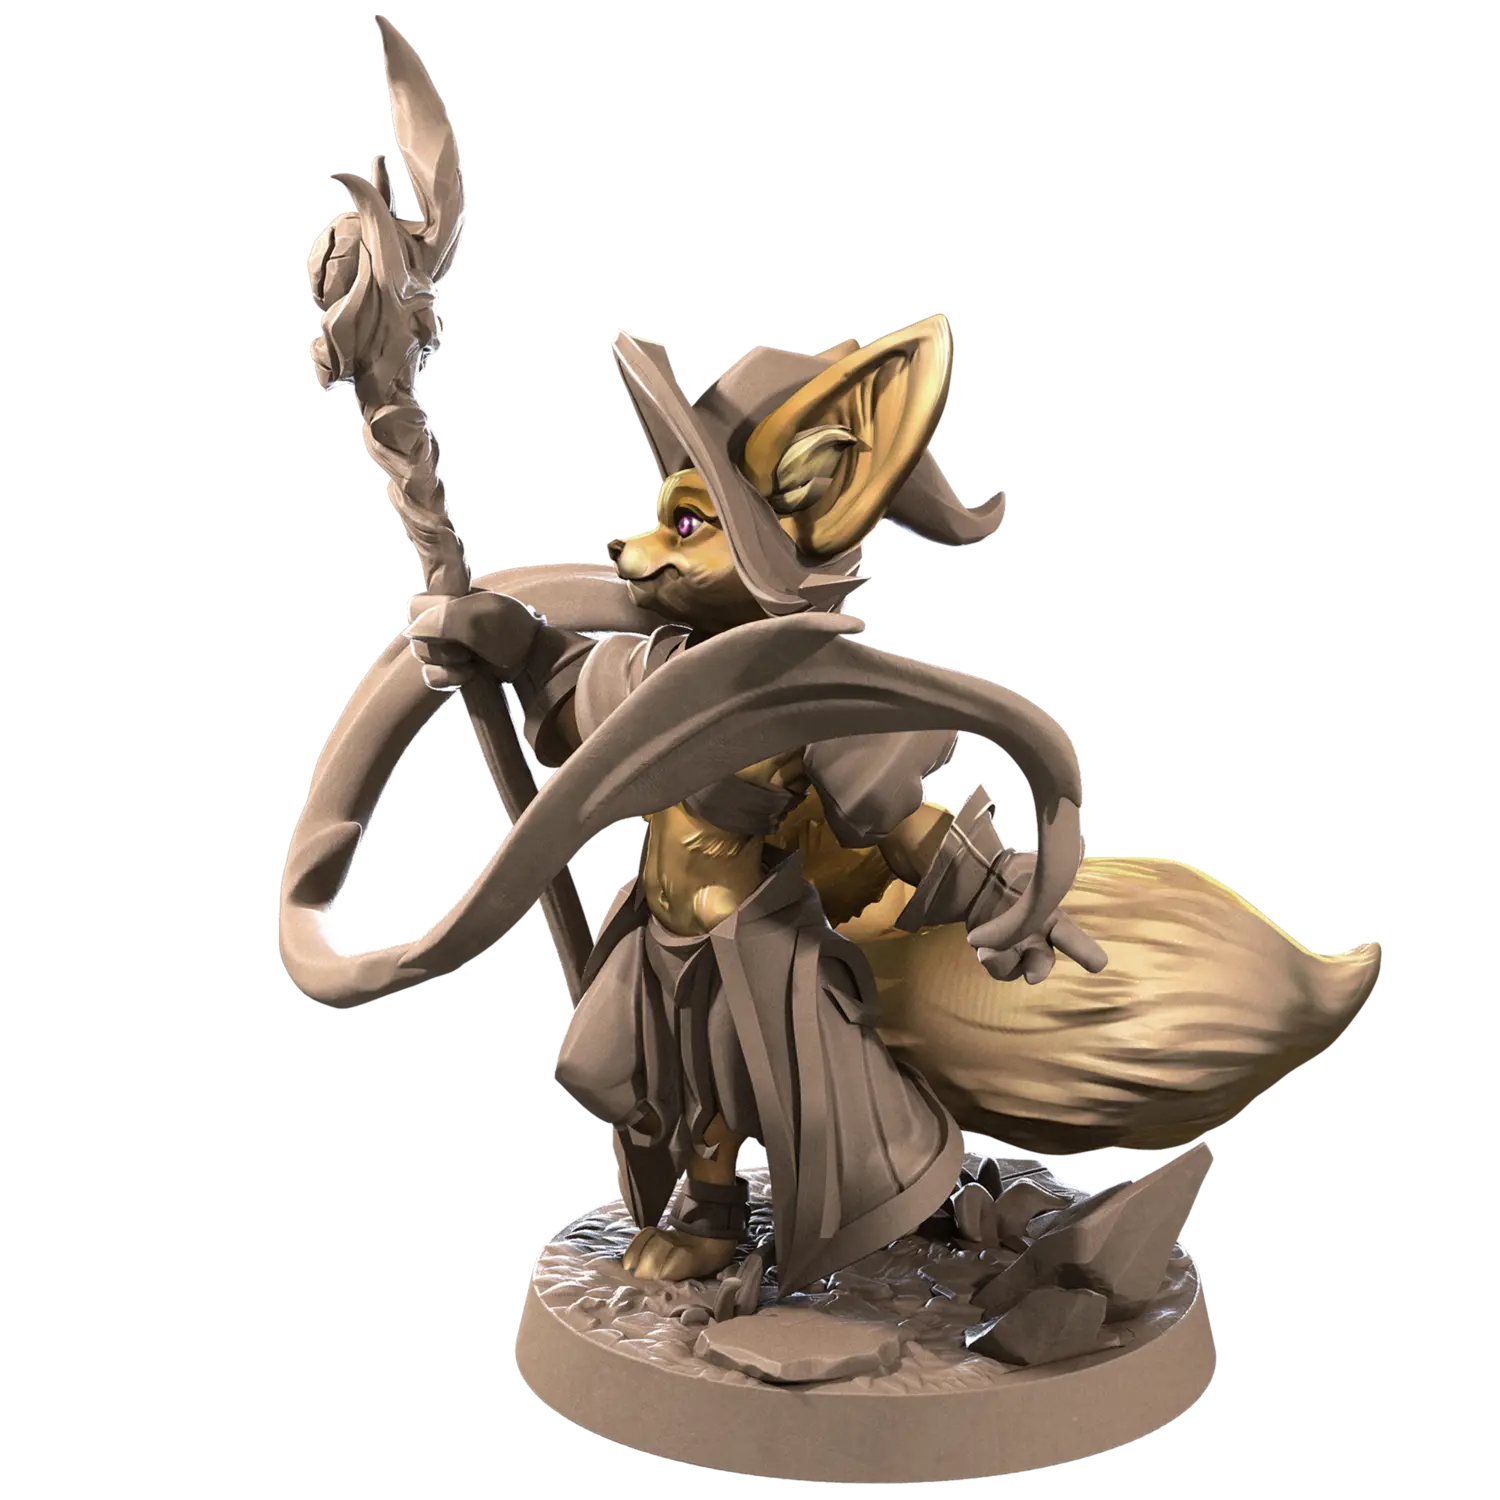 DnD Druid - Foxfolks - Miniature - Priest - Sorcerer - Wizard Willow  Druid - Foxfolks - Miniature - Priest - Sorcerer - Wizard sold by DoubleHitShop